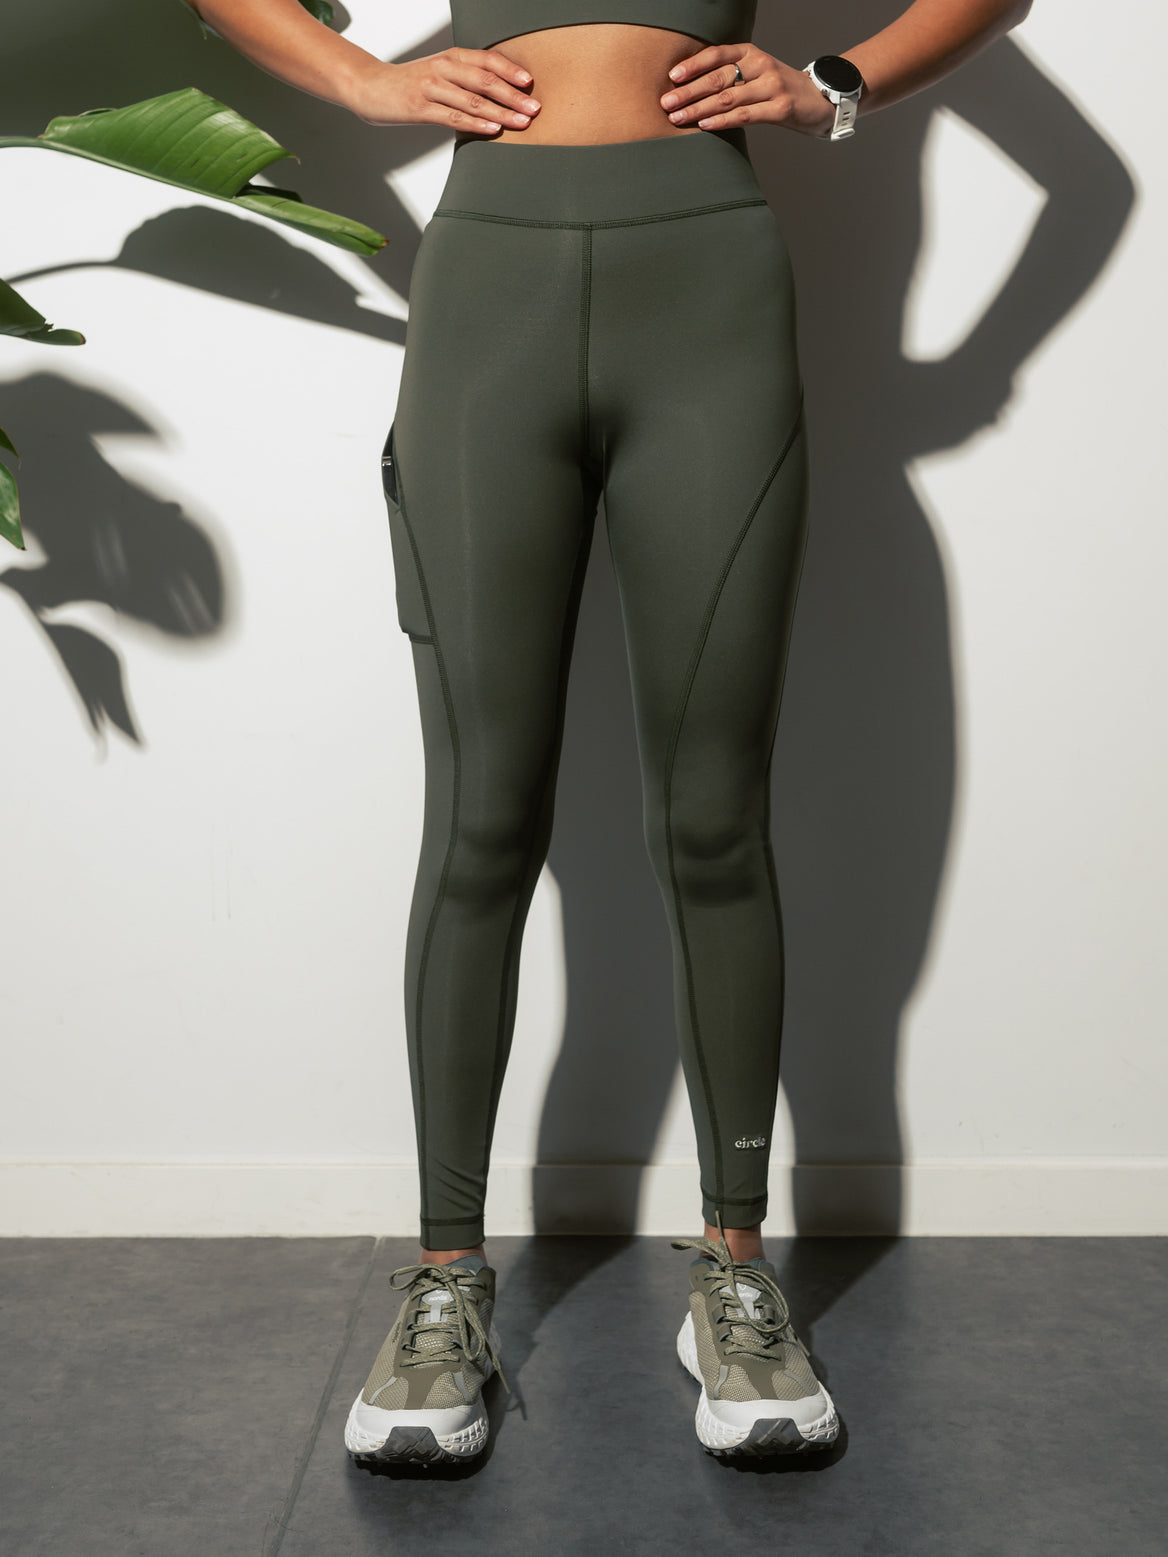 Shascullfites Gym And Shaping Leggings Olive Green Yoga Pants Sports Direct  Running Leggins Christmas Sports Legging